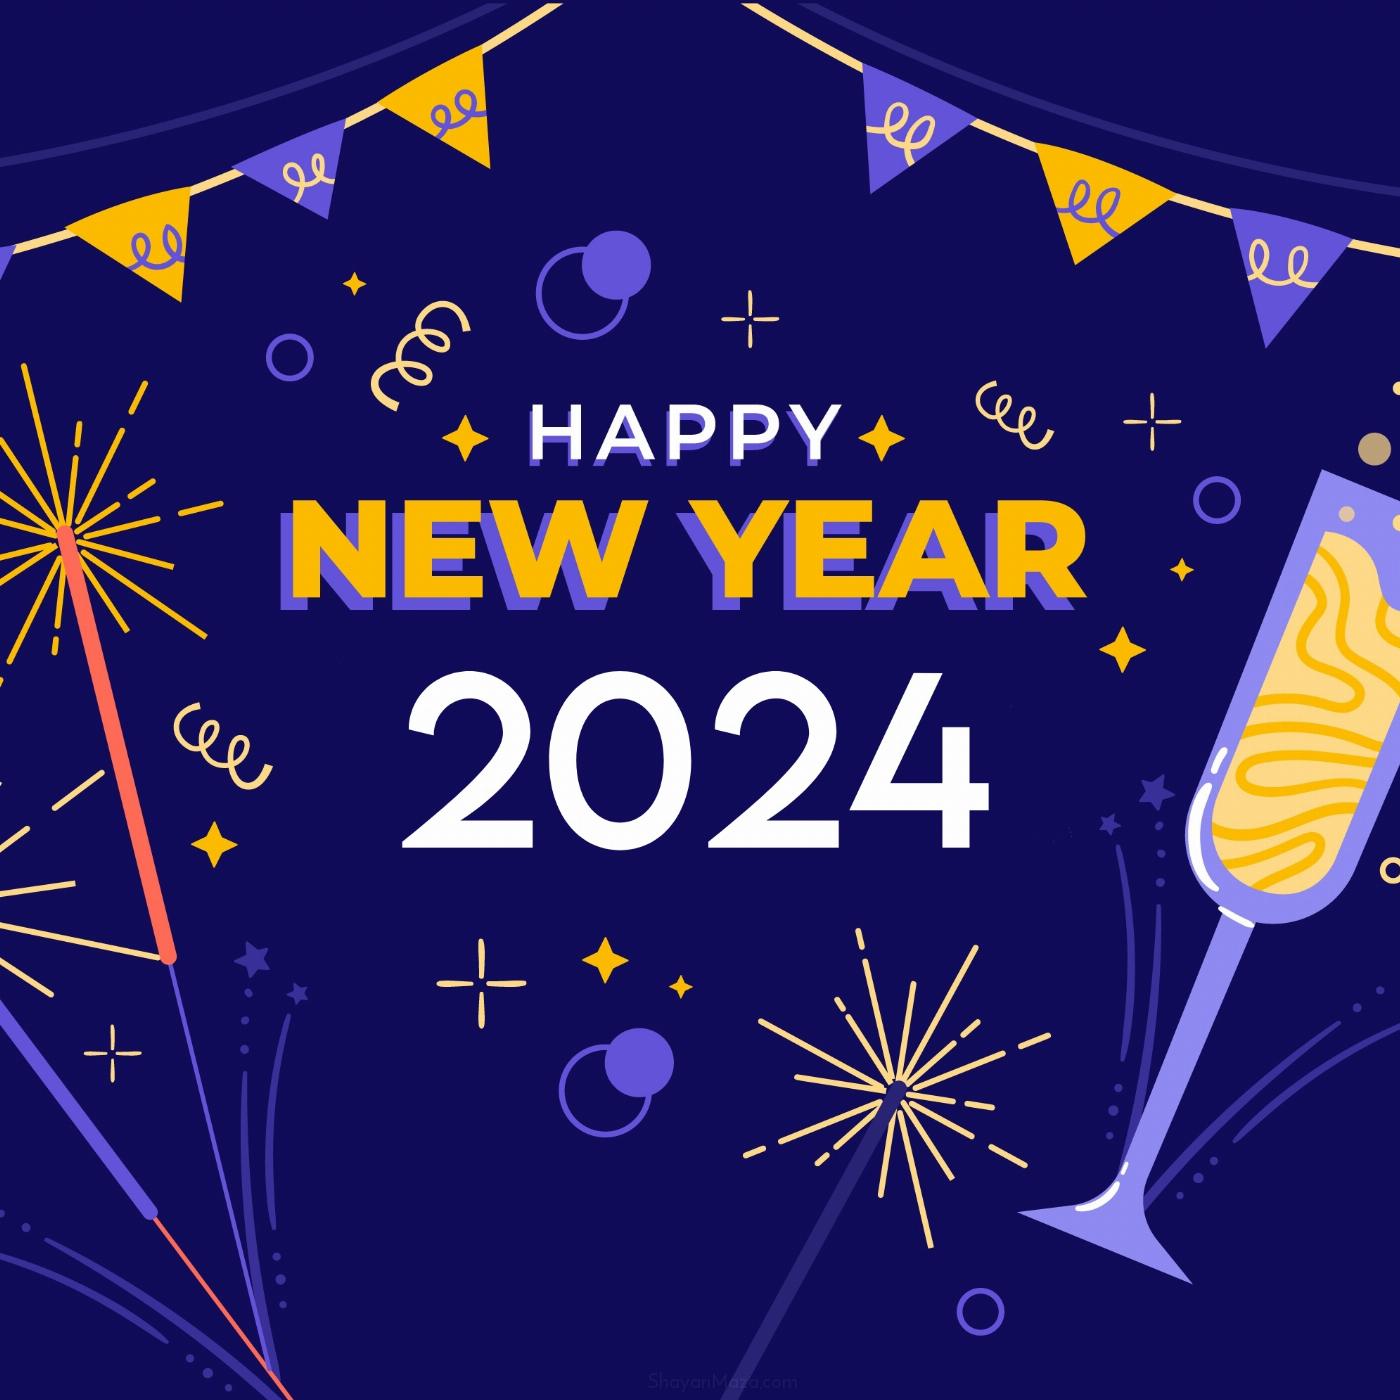 Happy New Year 2024 Ki Images